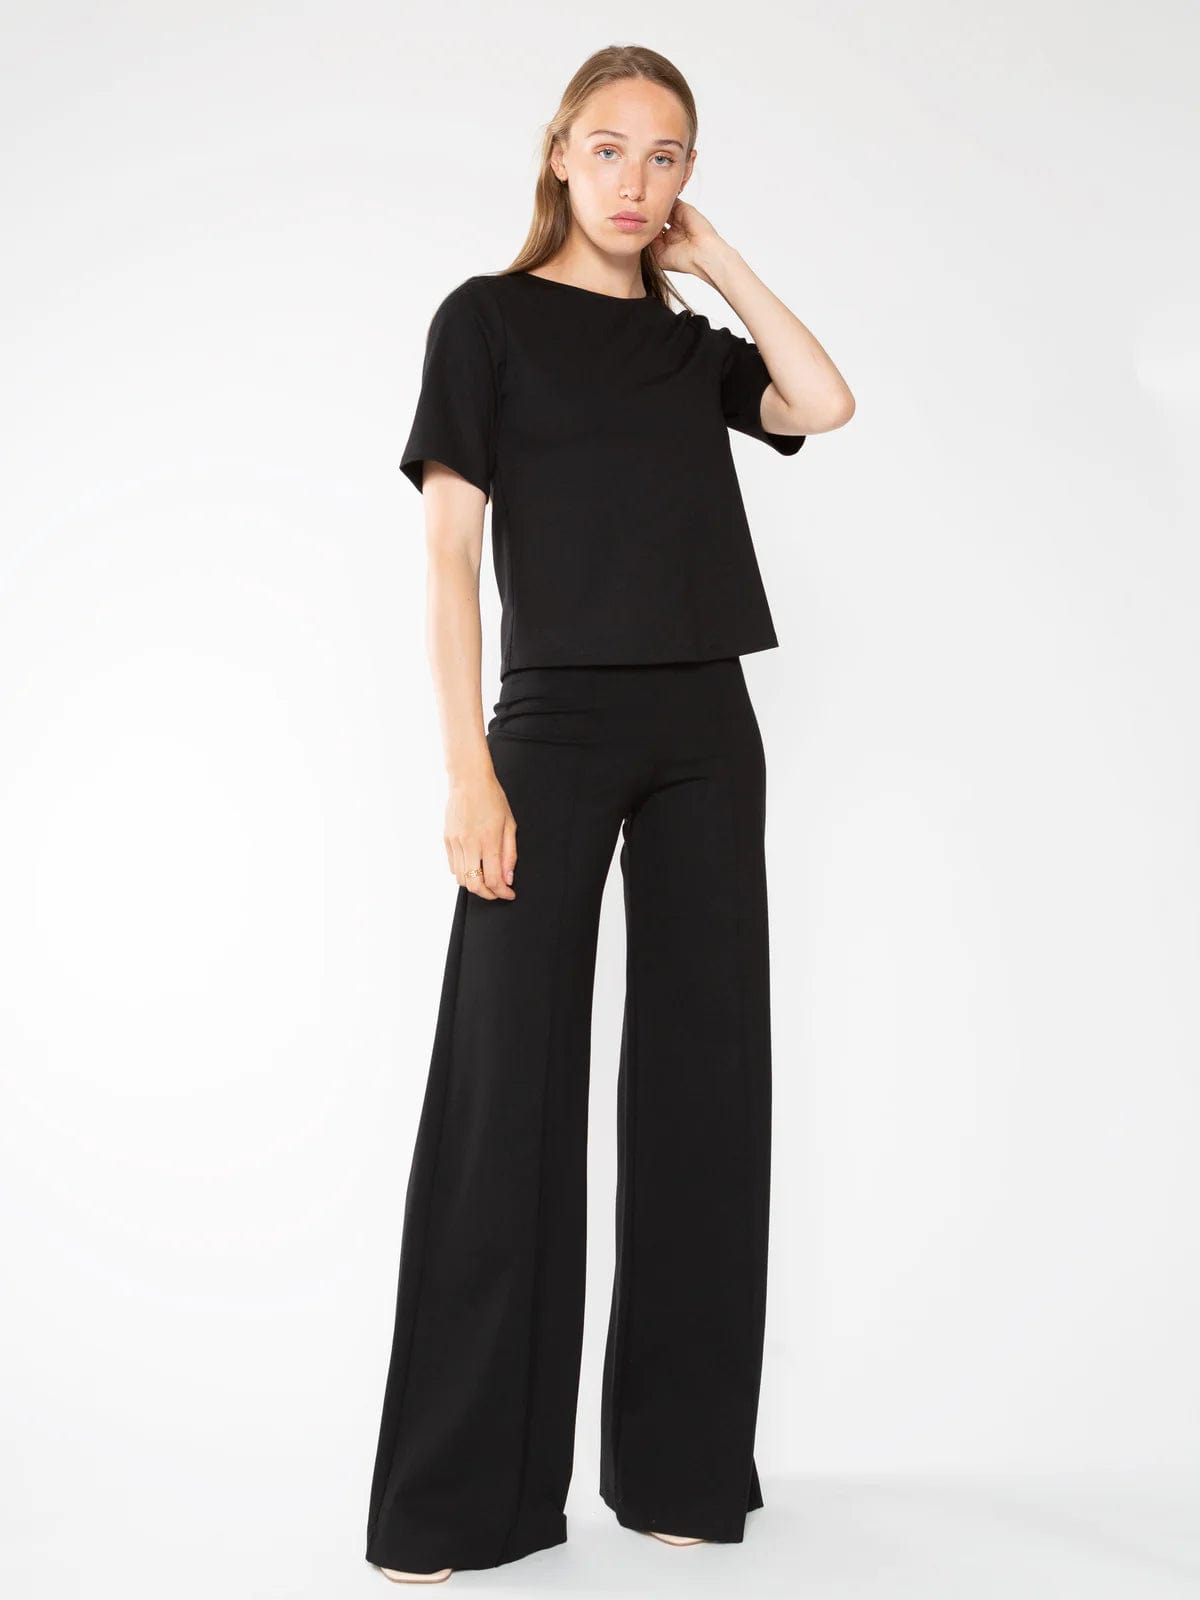 Ripley Rader Women's Shirts & Tops Black / 1 (XS) Ripley Rader Ponte Knit Short Sleeve Top Extended